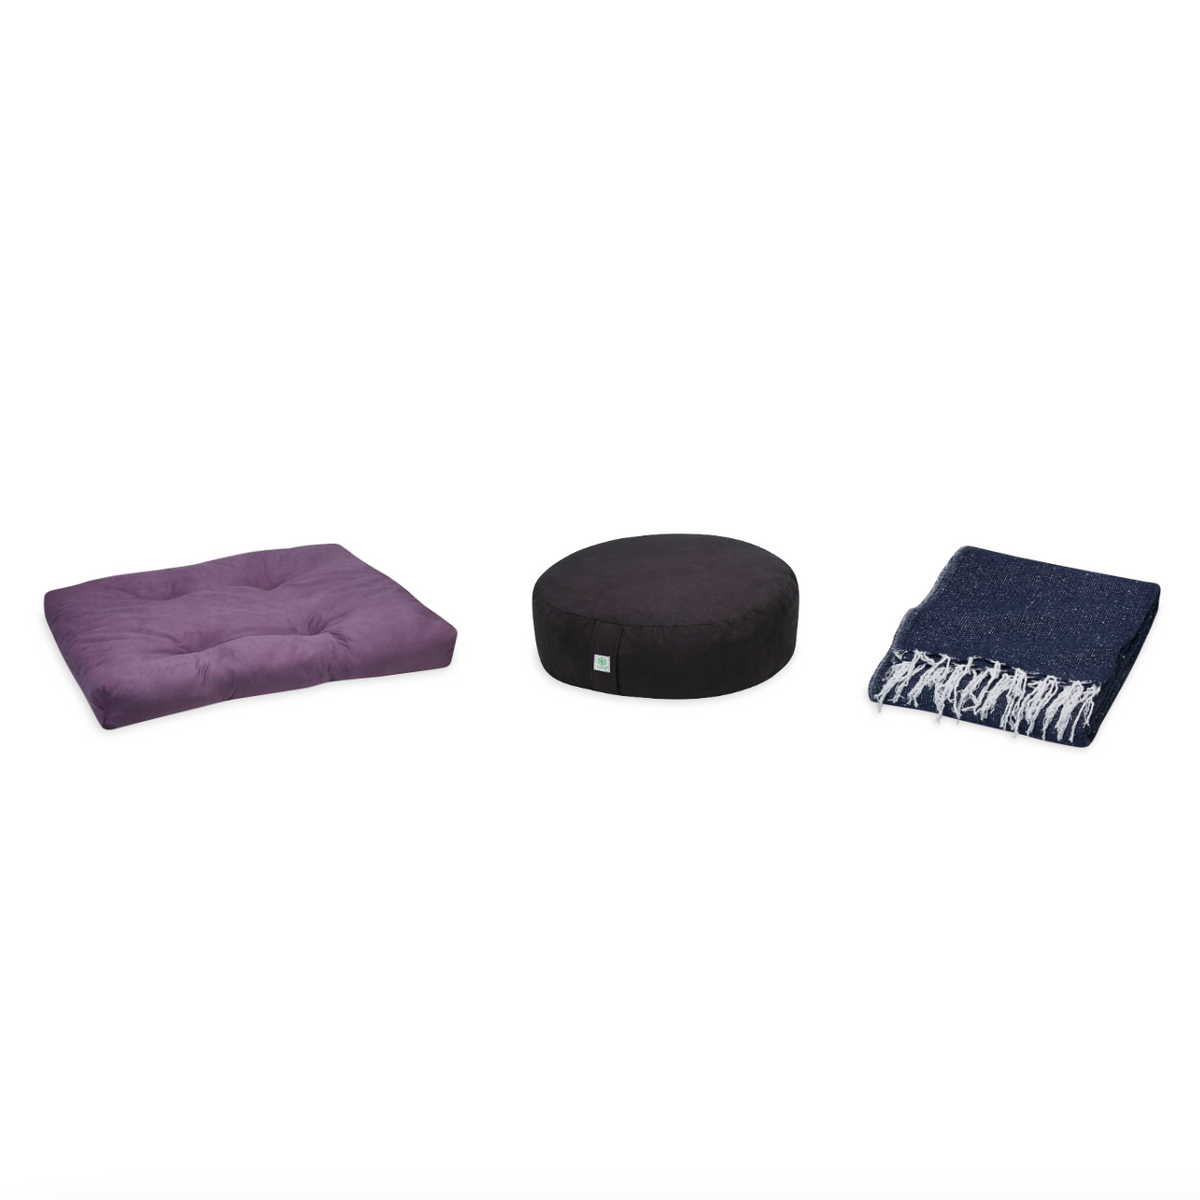 Meditation Bundle - Zabuton (Purple), Zafu (Black), Blanket (Navy)